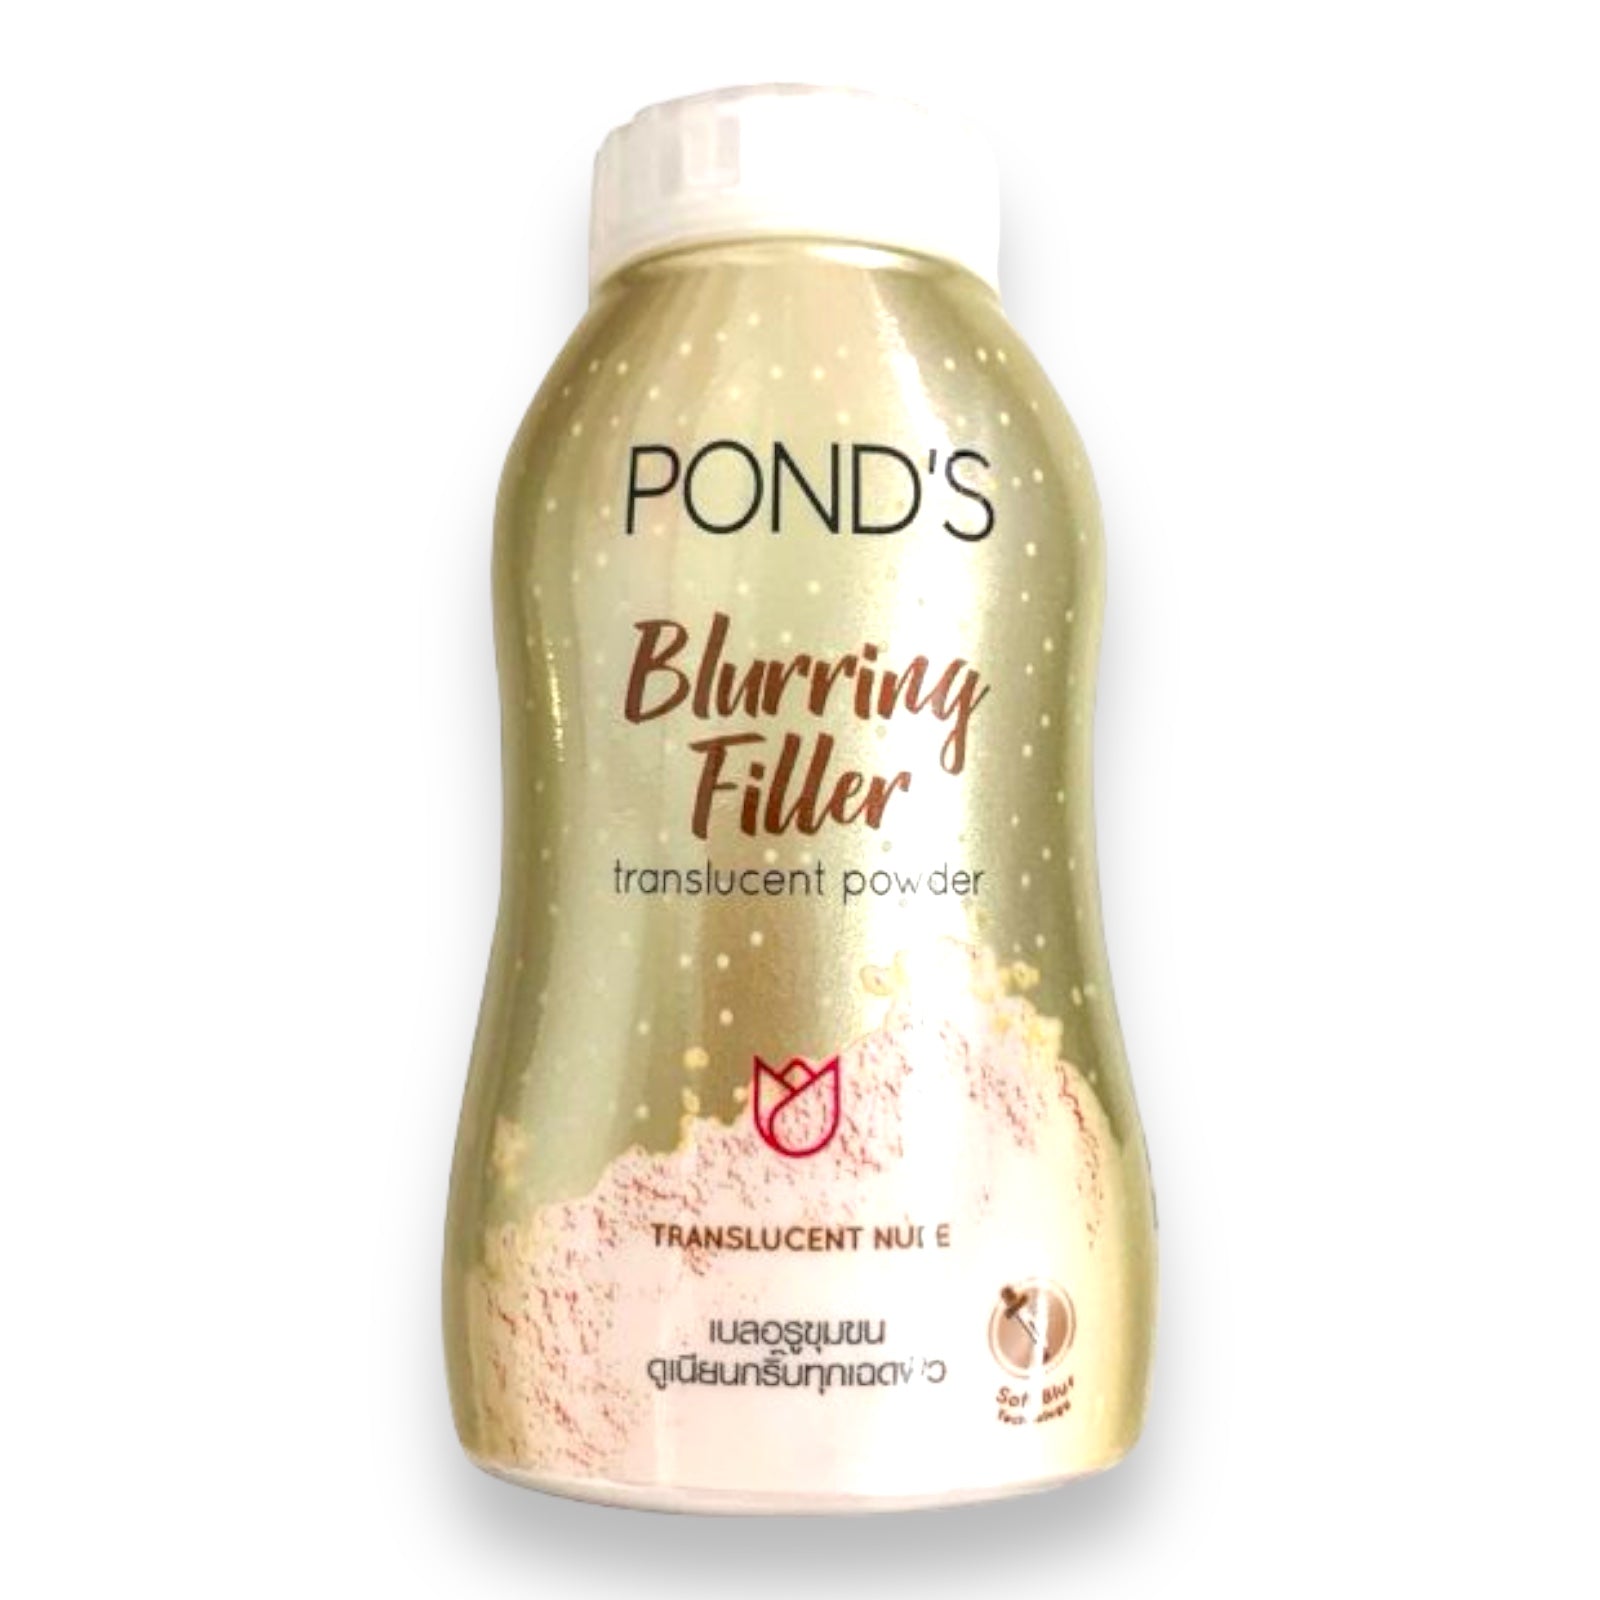 Pond’s - Blurring Filler Translucent Powder